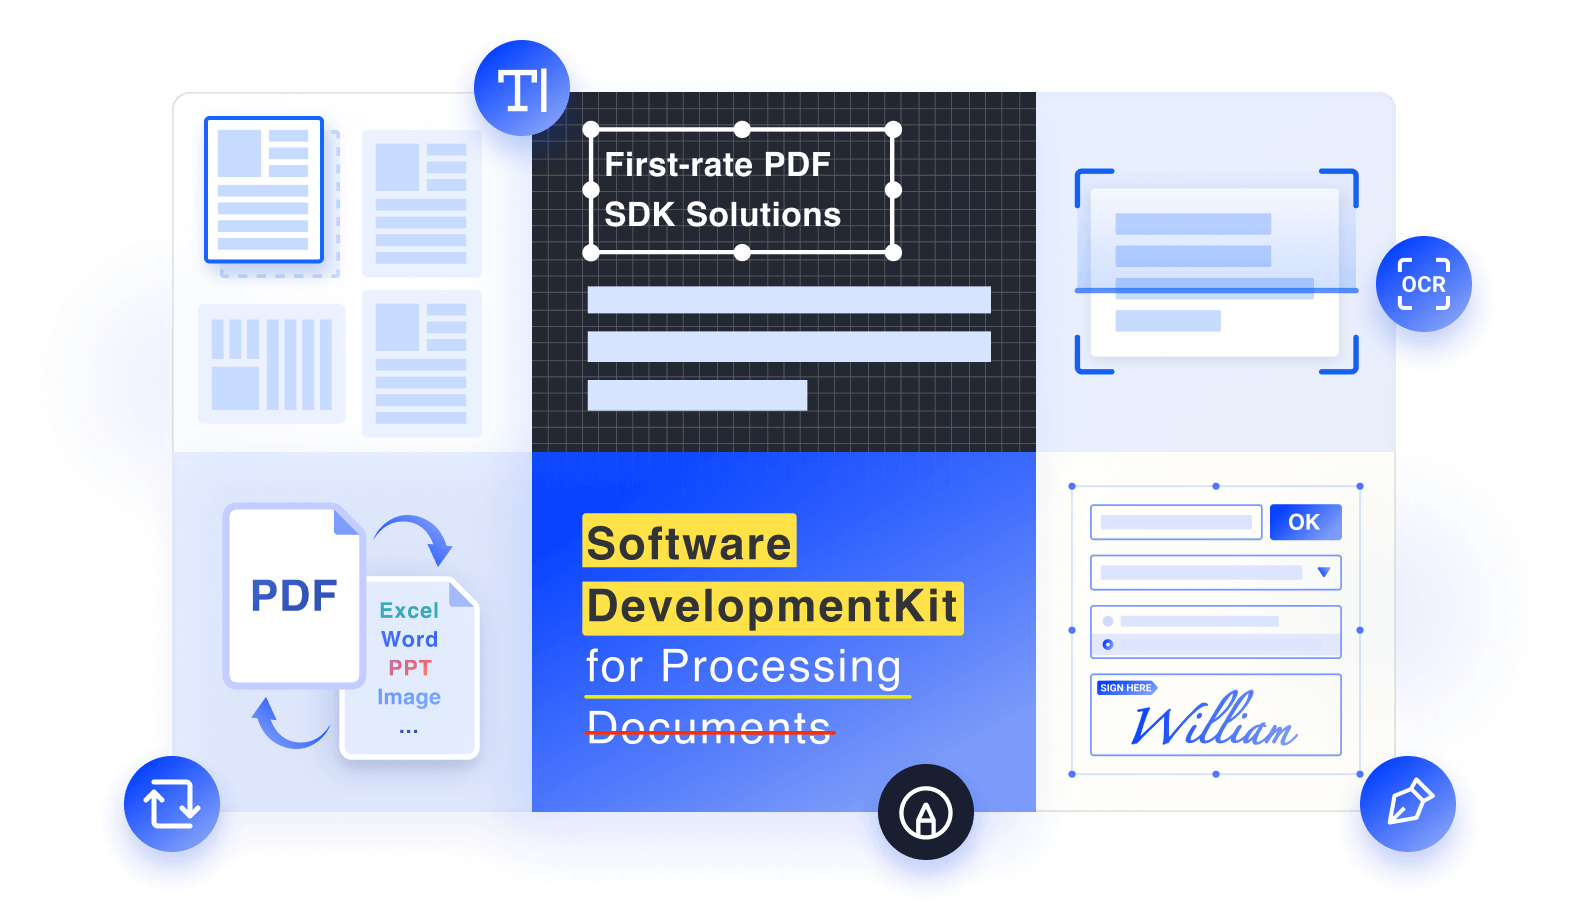 PDF Reader Pro for Windows